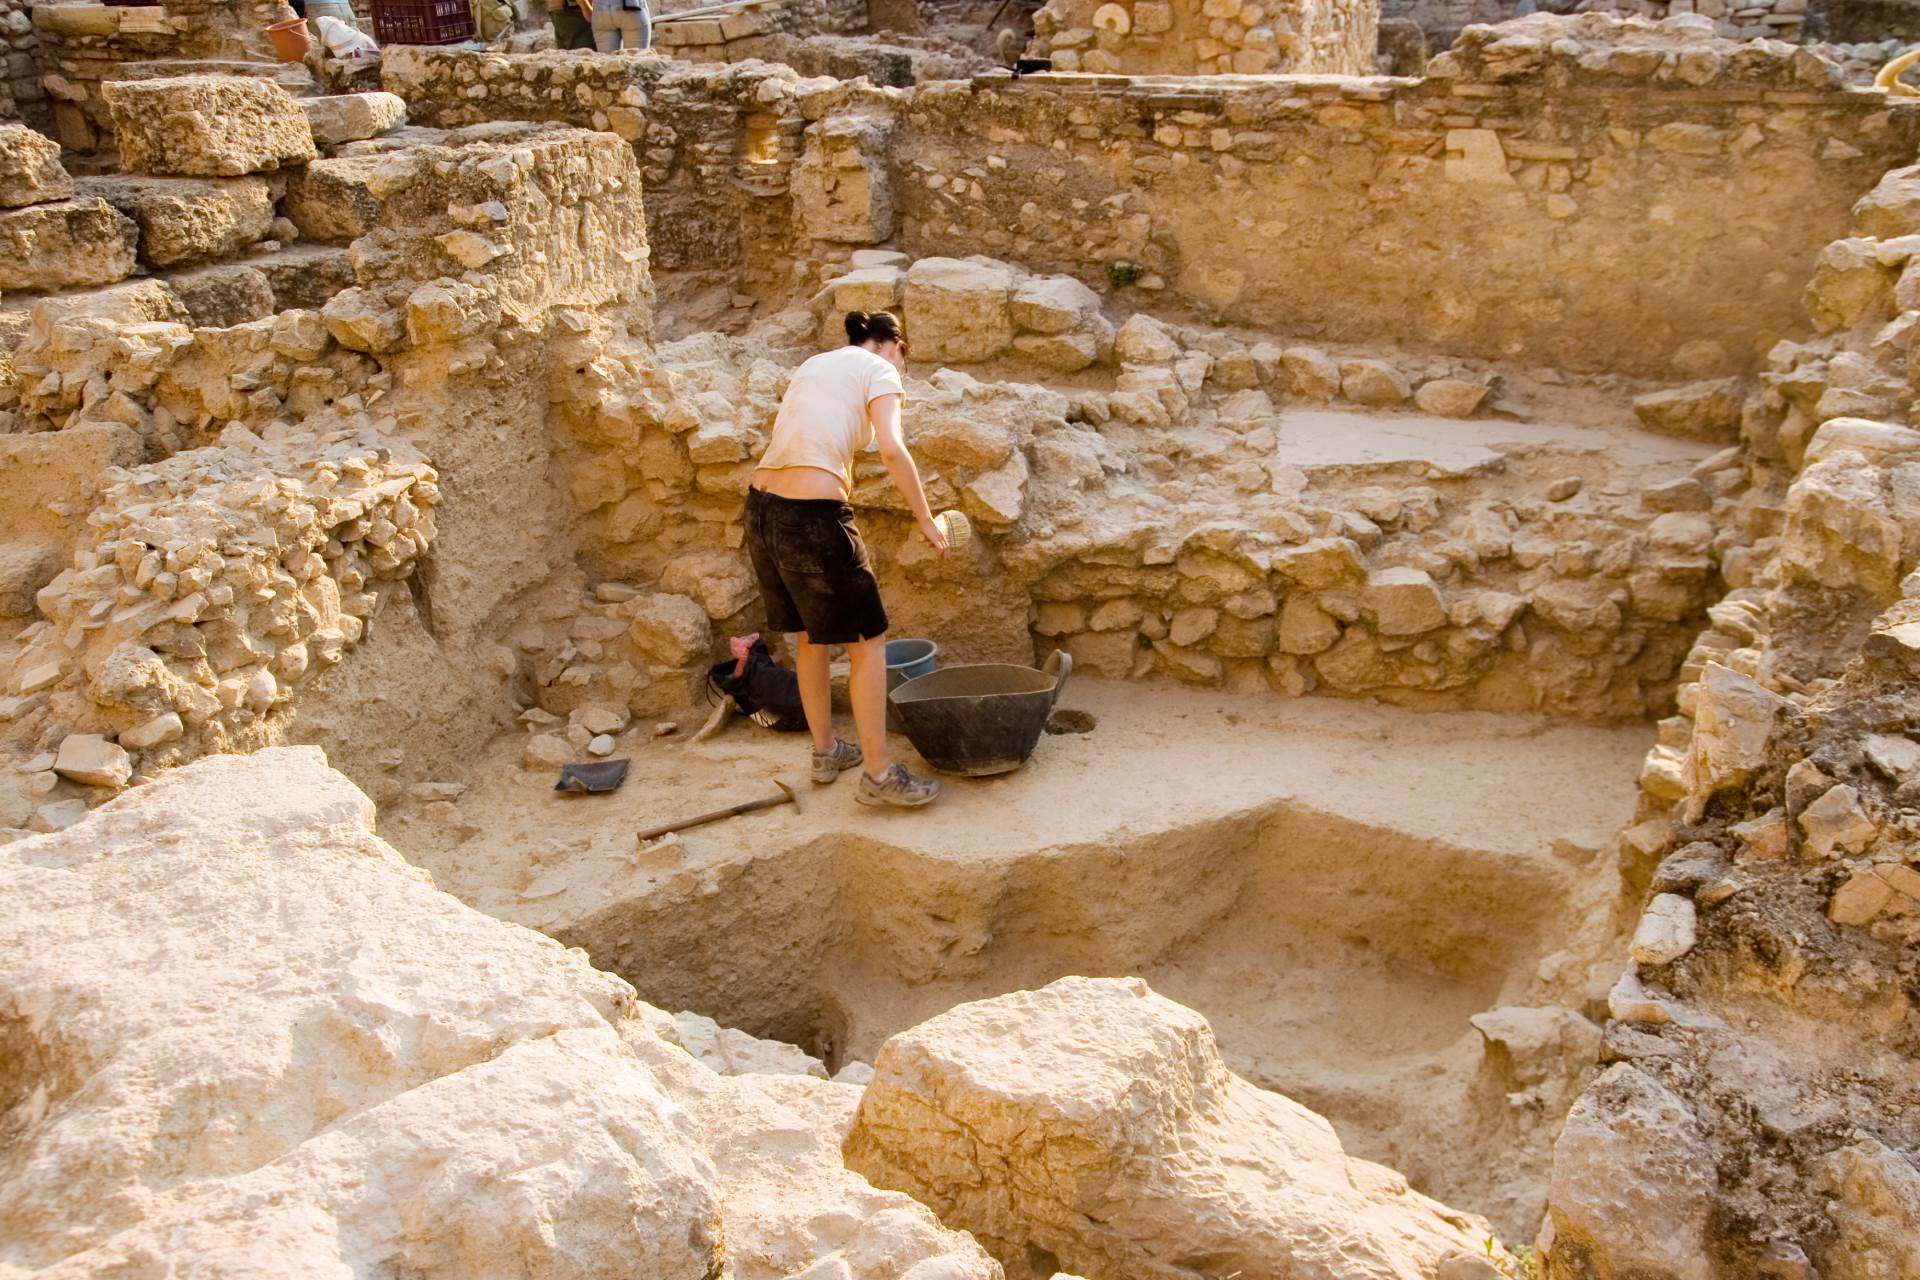  Arheolozi naišli na fascinantne dokaze o carstvu Aksum 